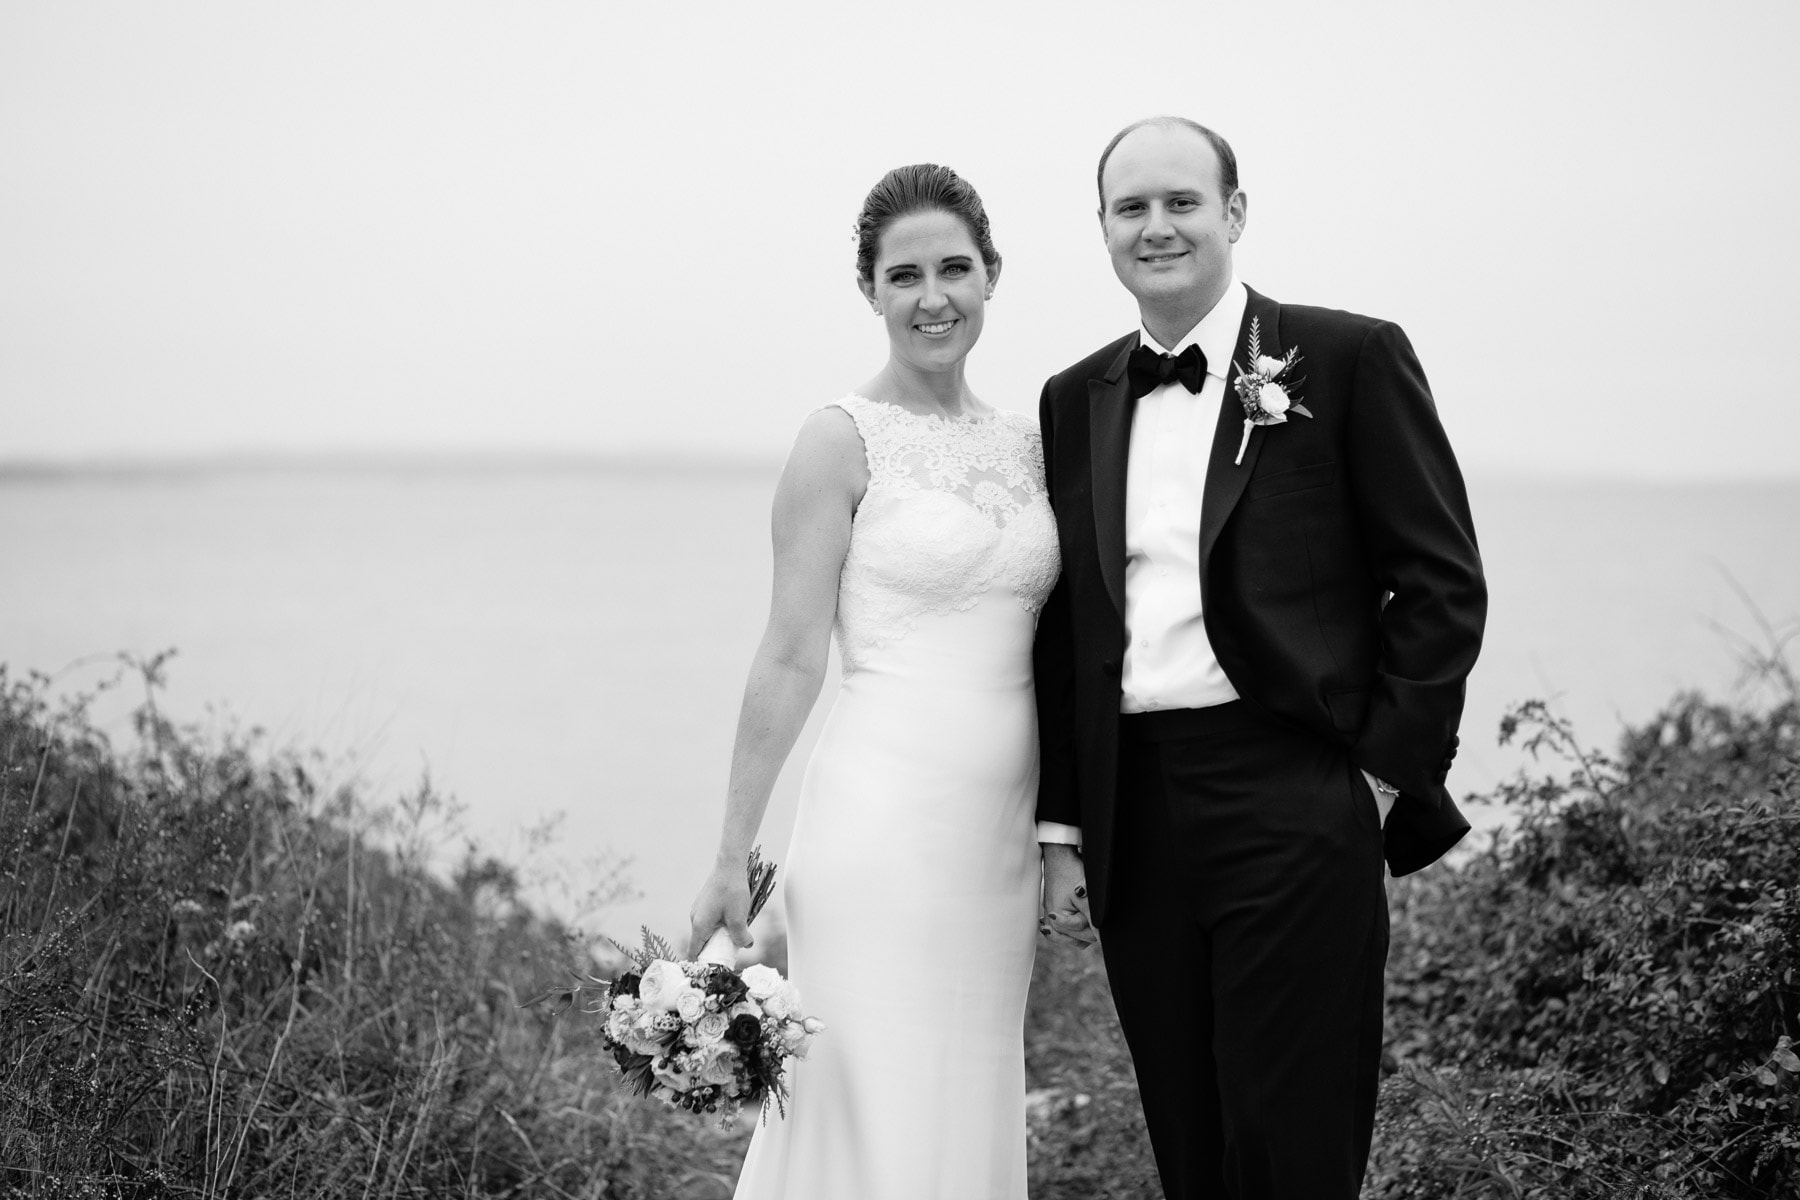 Caitlin and Tom's wedding portraits at Nobska Light | Kelly Benvenuto Photography | Boston Wedding Photographer